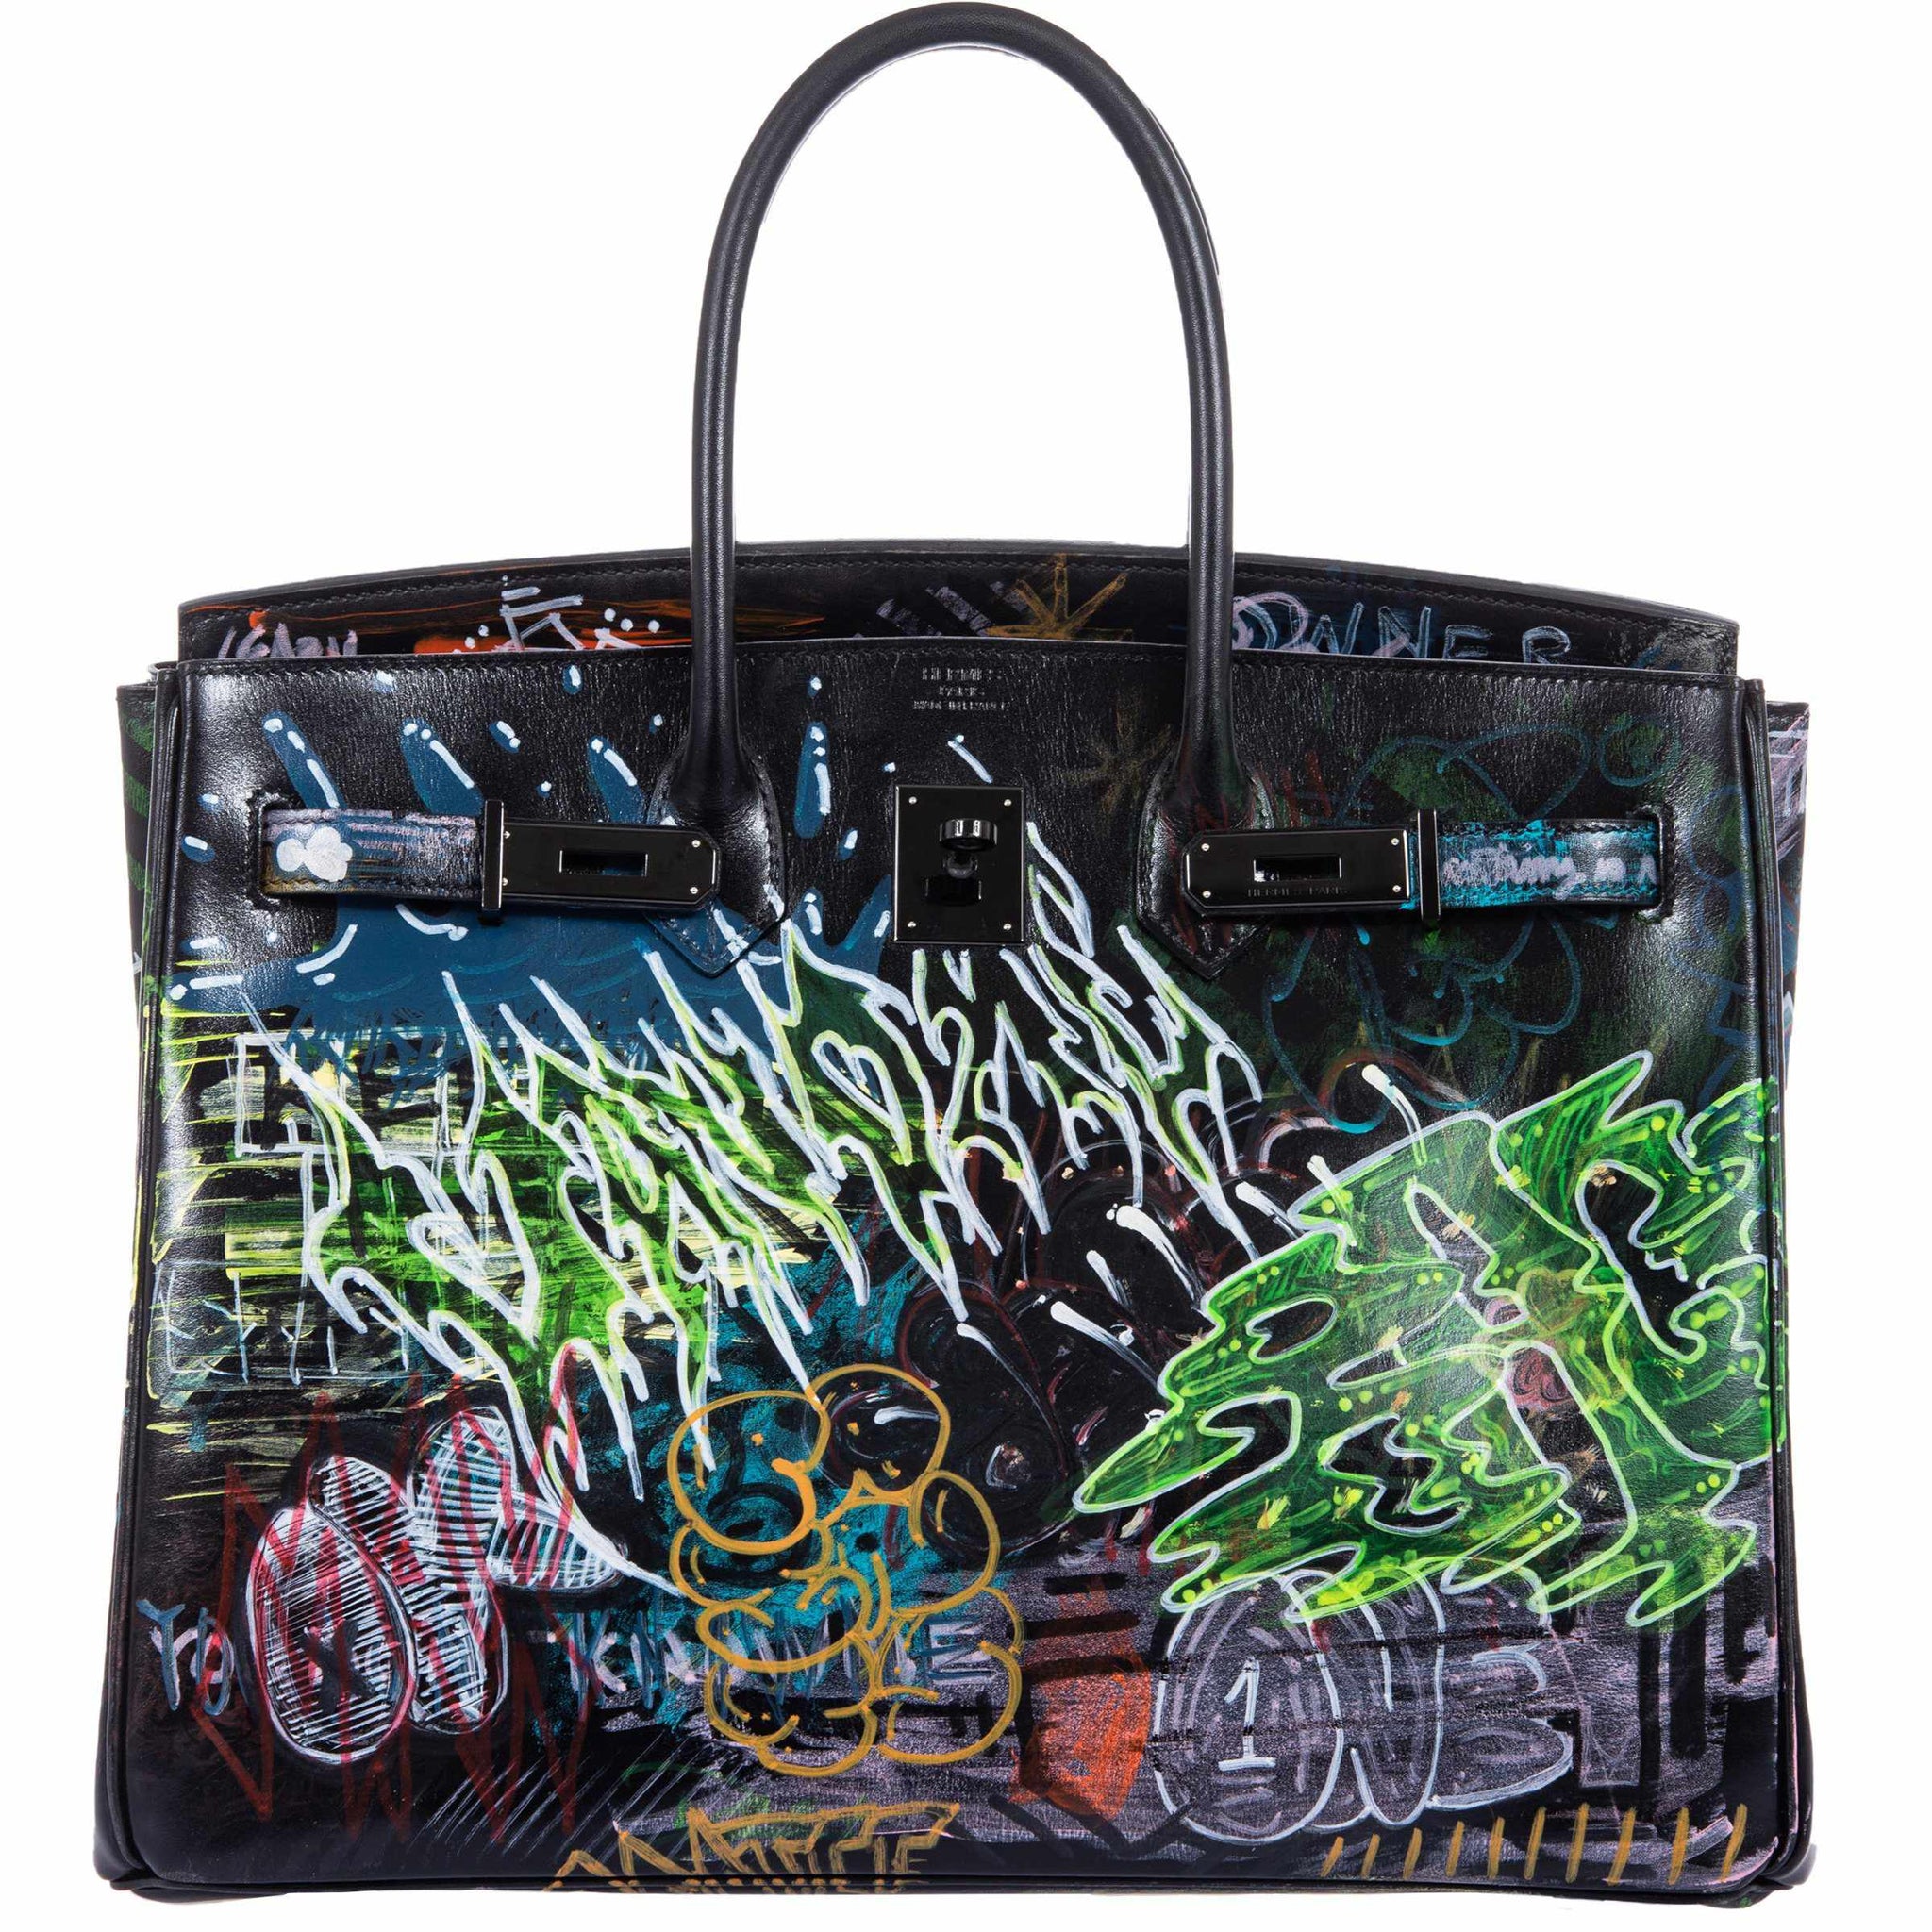 Brand New Graffiti Birkin Style Bag